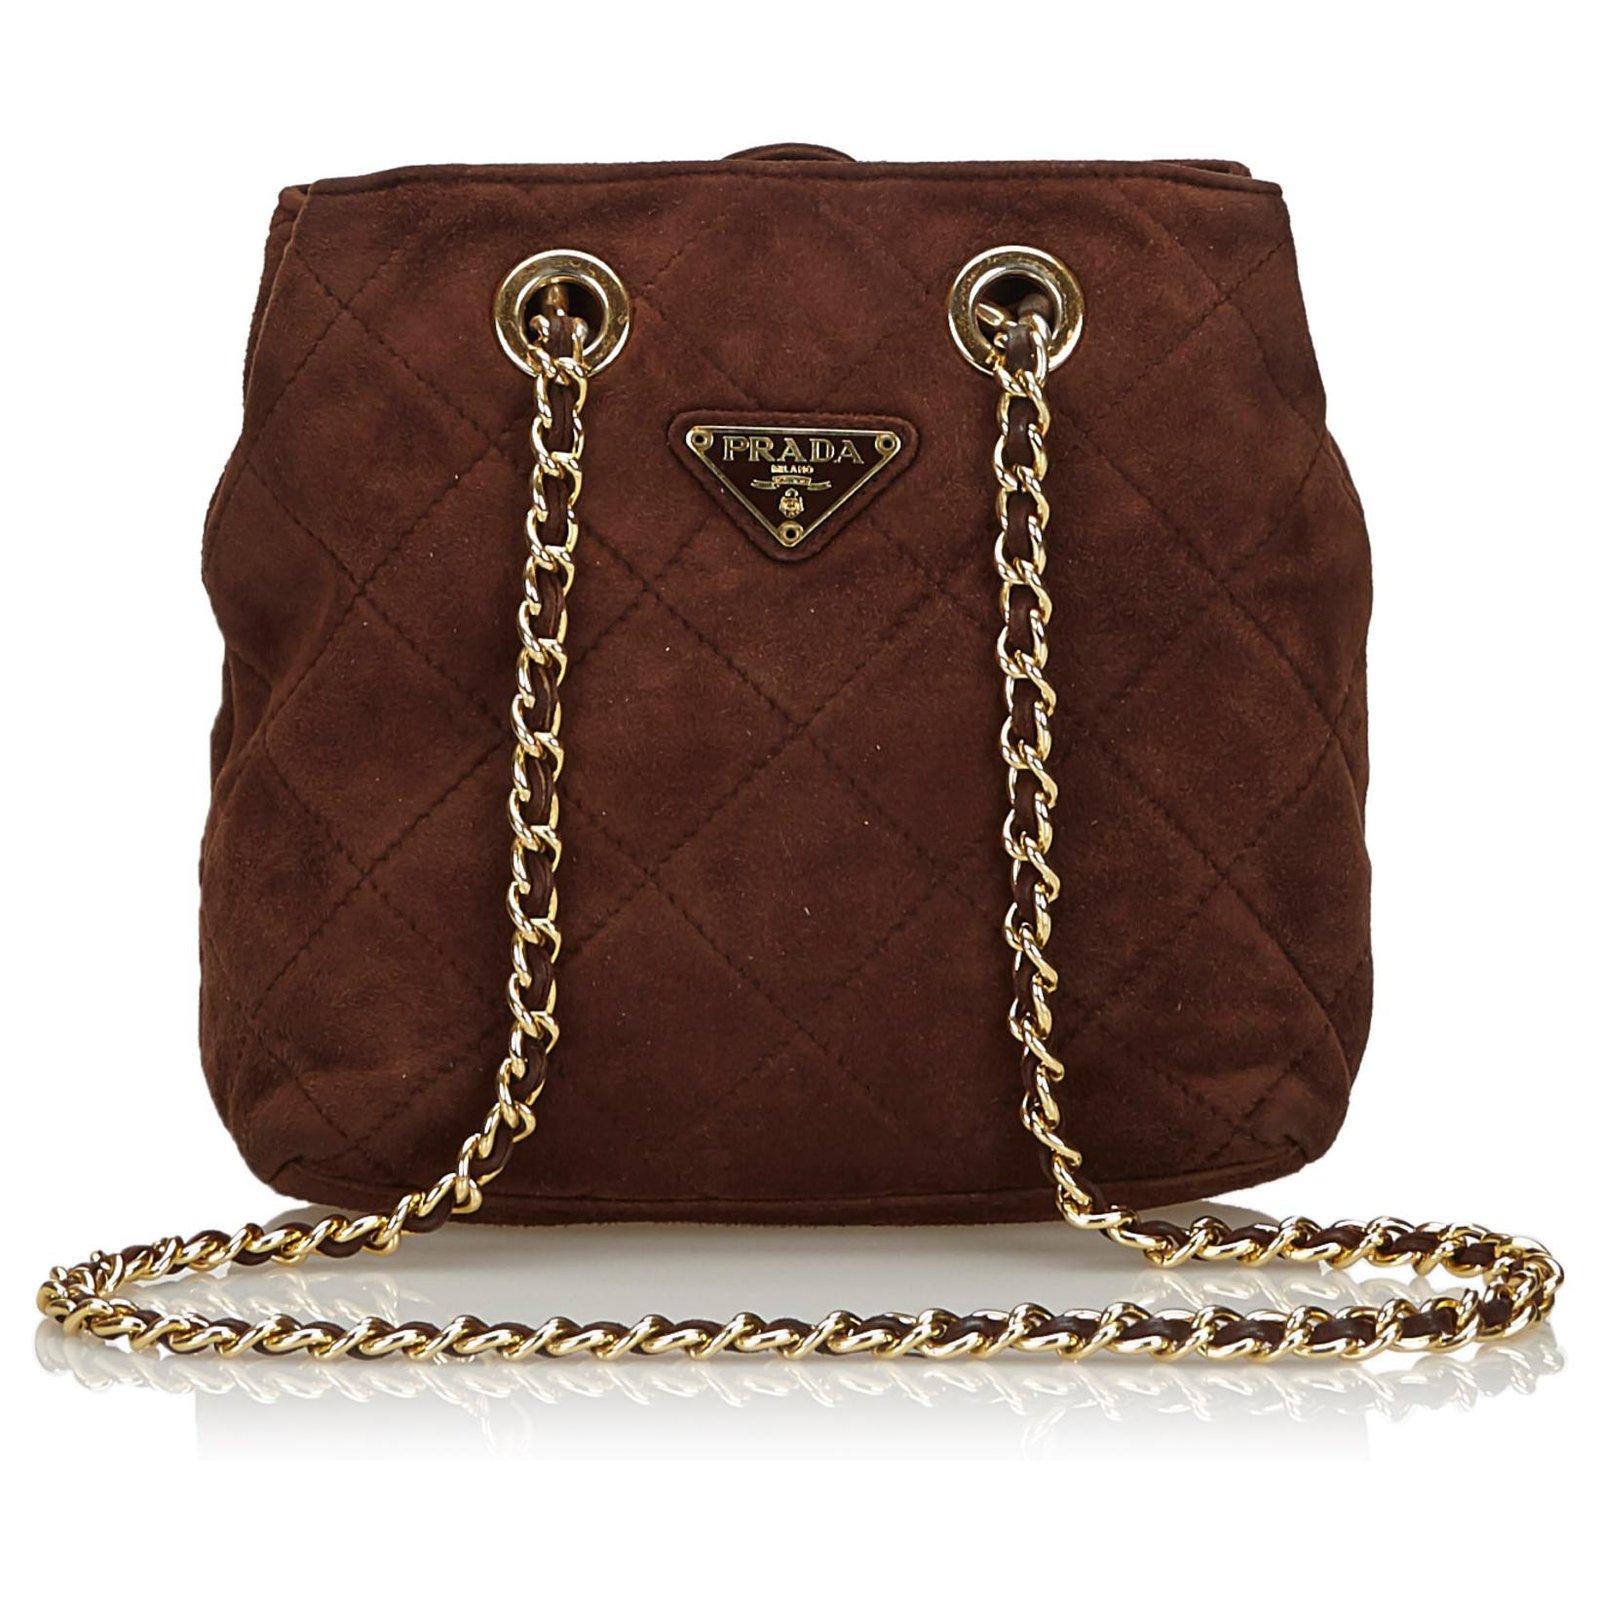 Auth PRADA Handbag Chain Shoulder Bag #2503 Dark Brown Leather